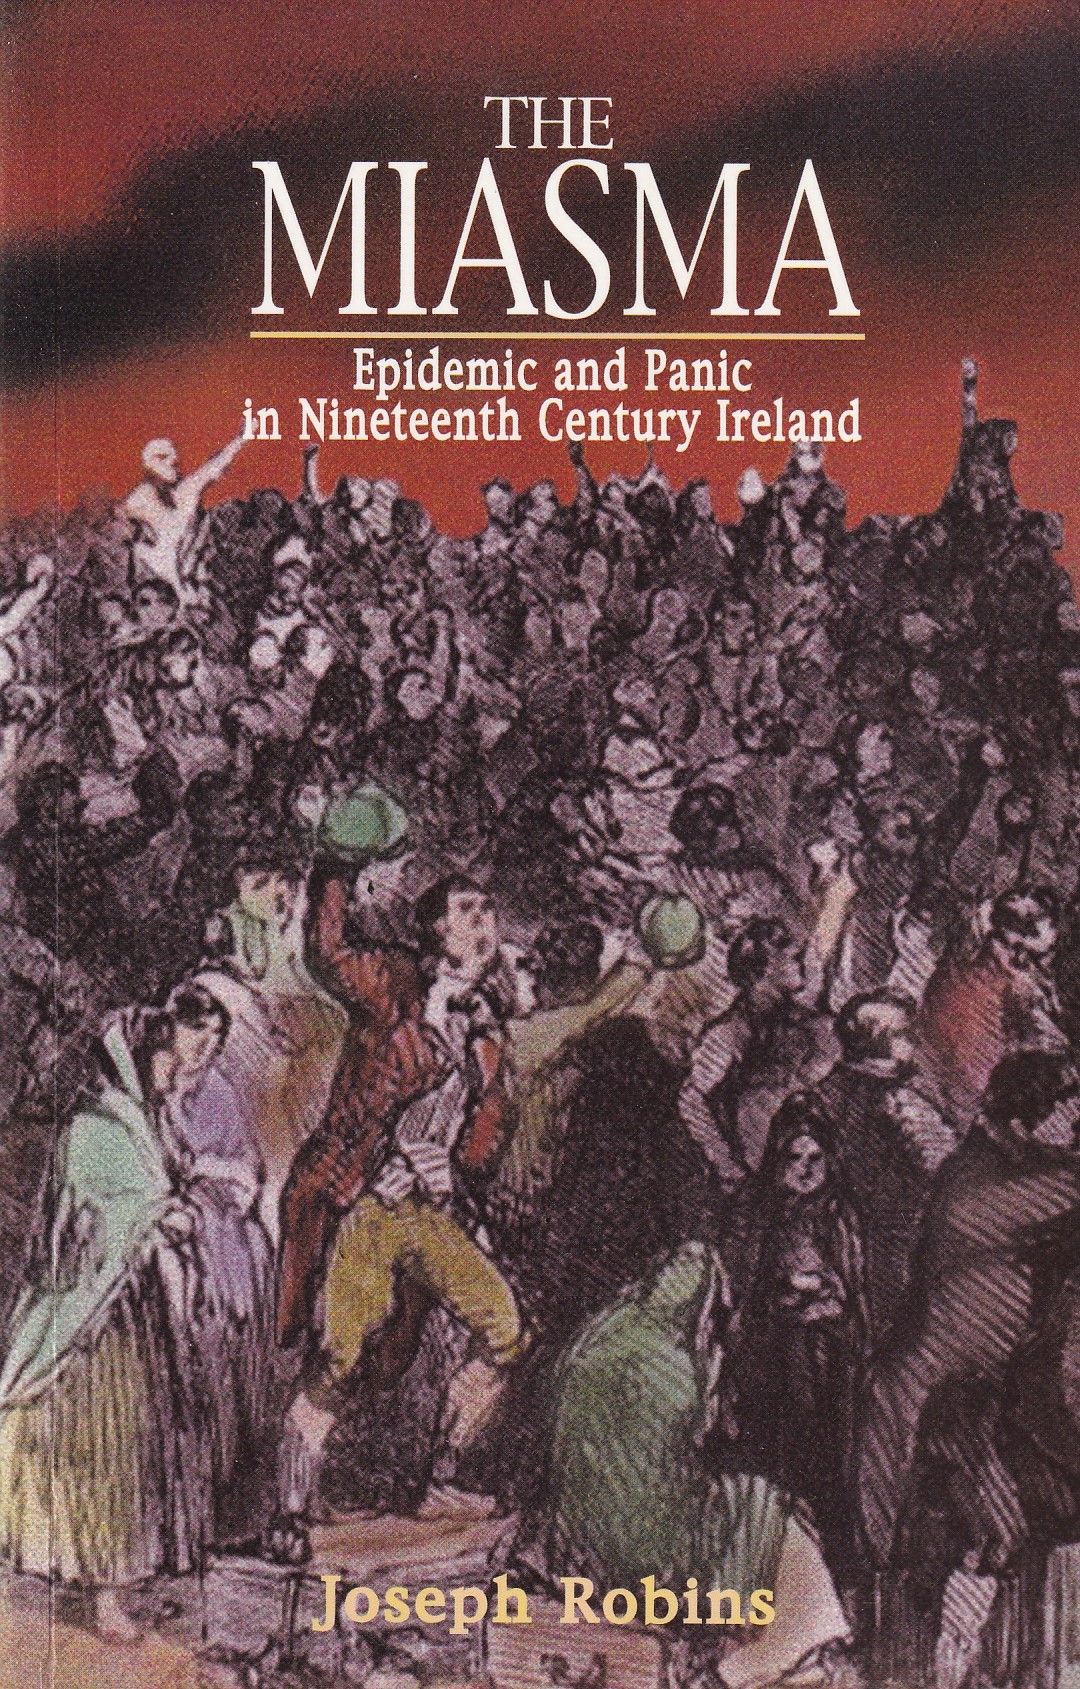 The Miasma: Epidemic and Panic in Nineteenth Century Ireland | Joseph Robins | Charlie Byrne's